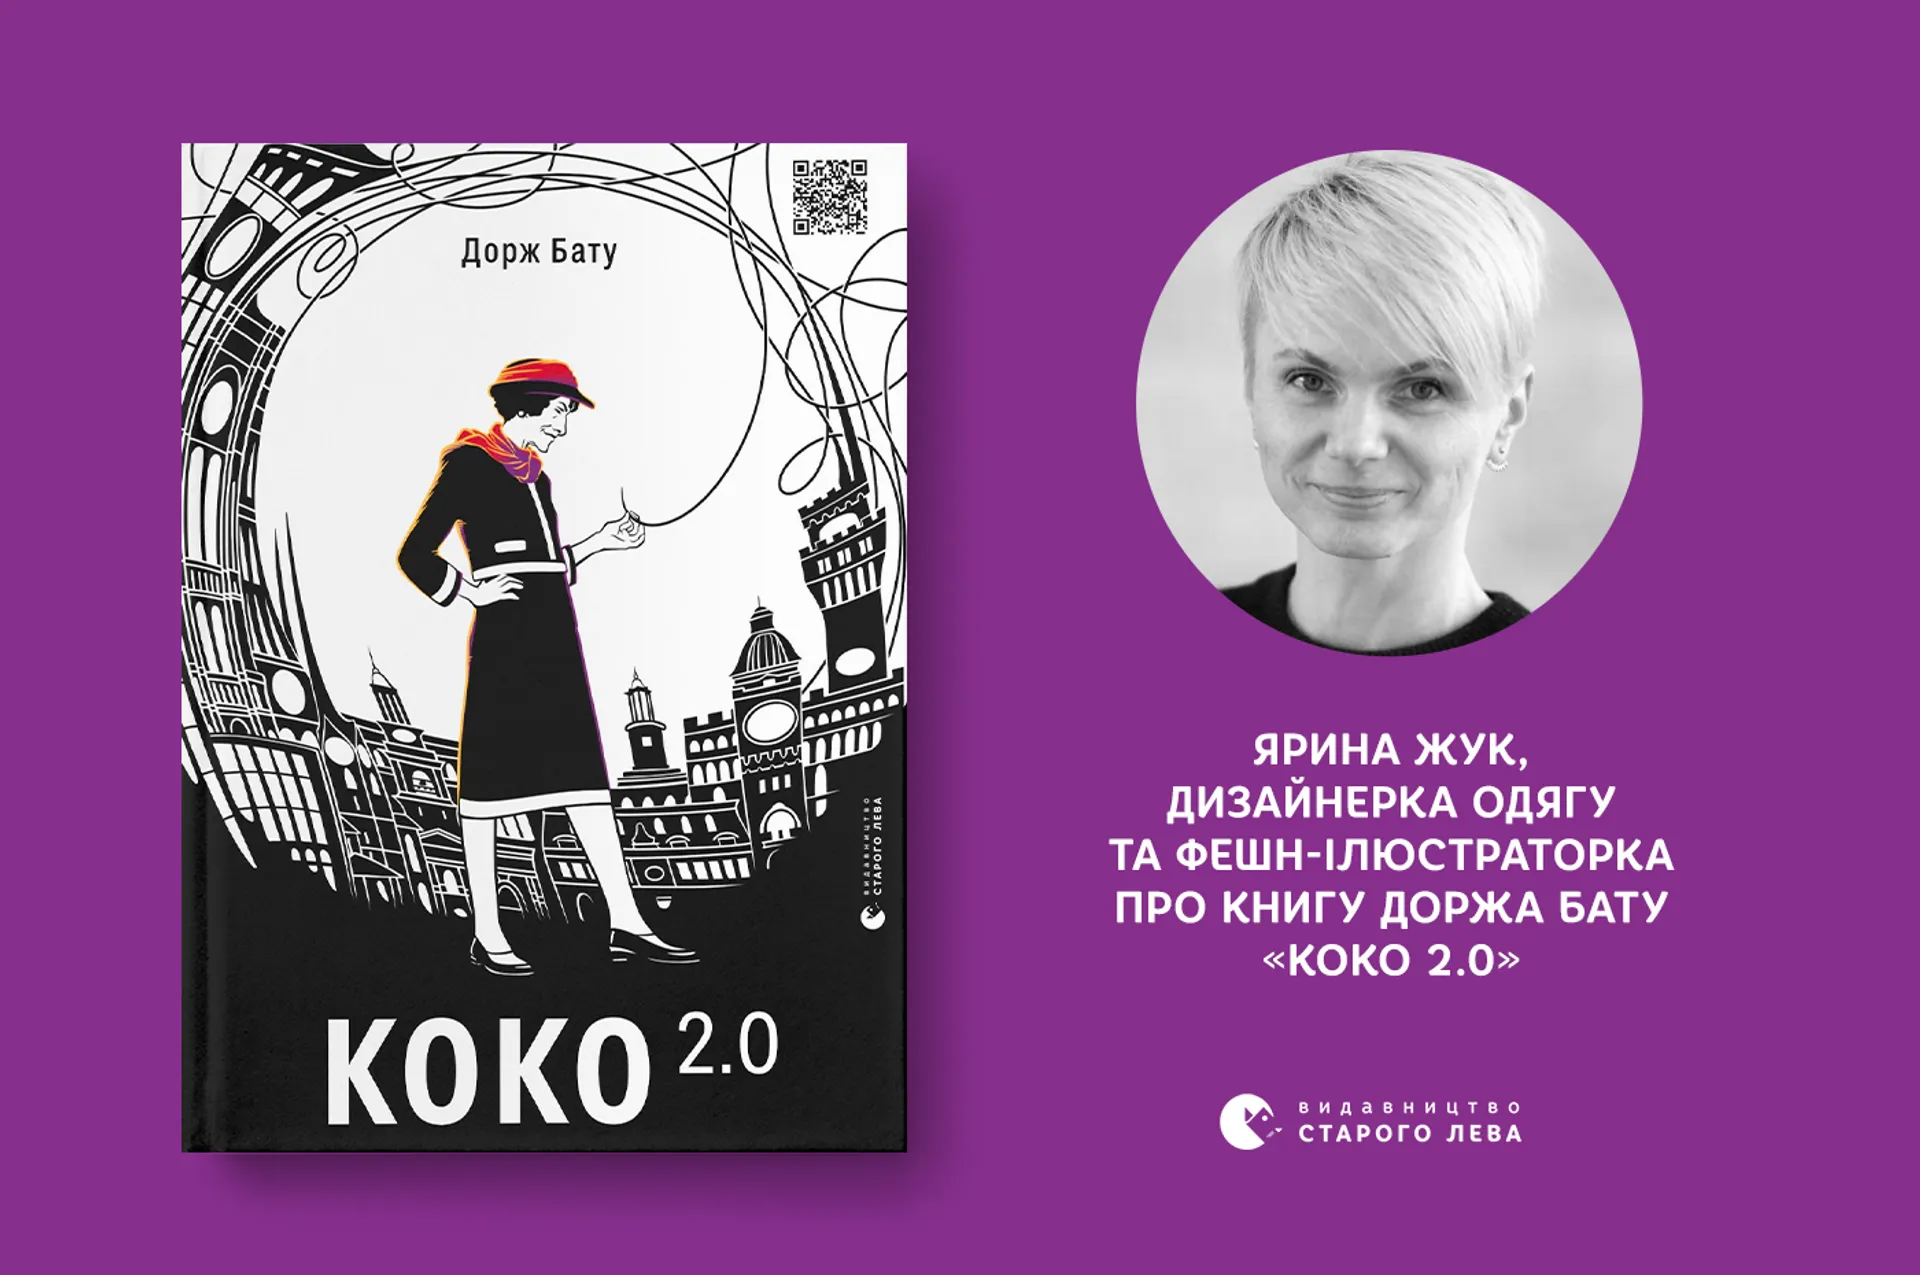 Ярина Жук, дизайнерка одягу та фешн-ілюстраторка, про книгу Доржа Бату «Коко 2.0»